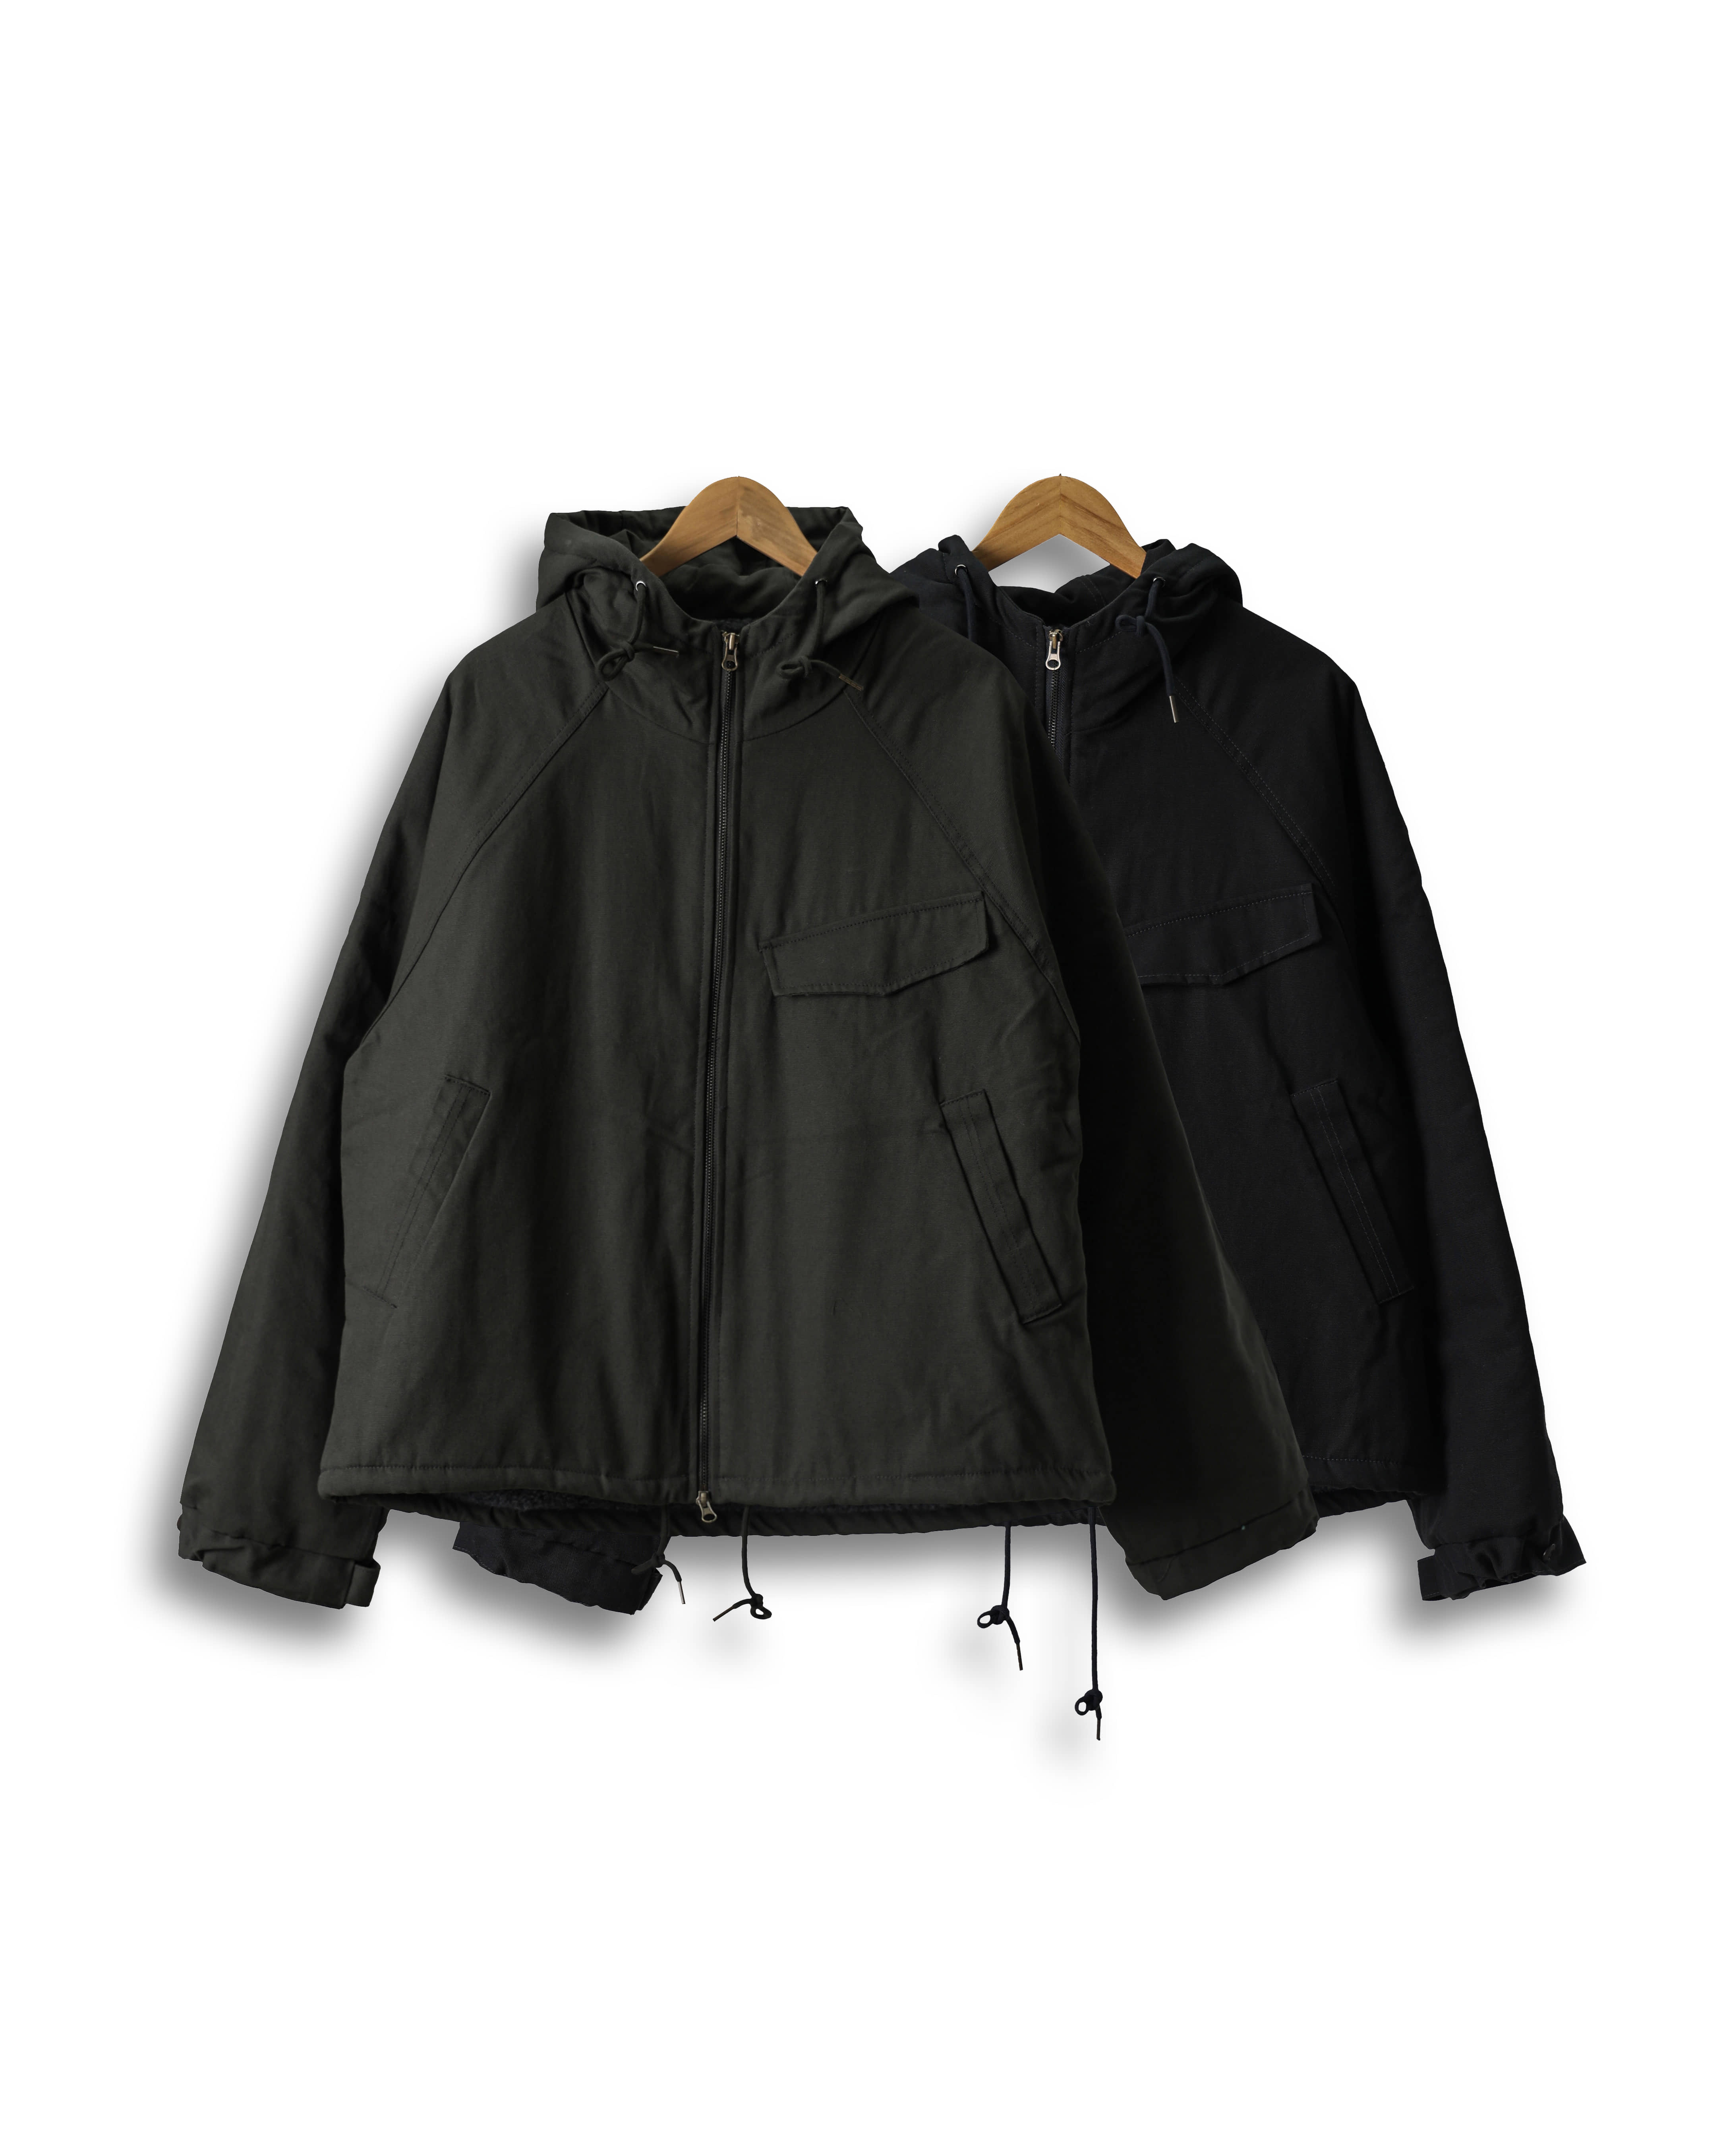 Other Density Dumble Hoodie Jacket (Black/Khaki)